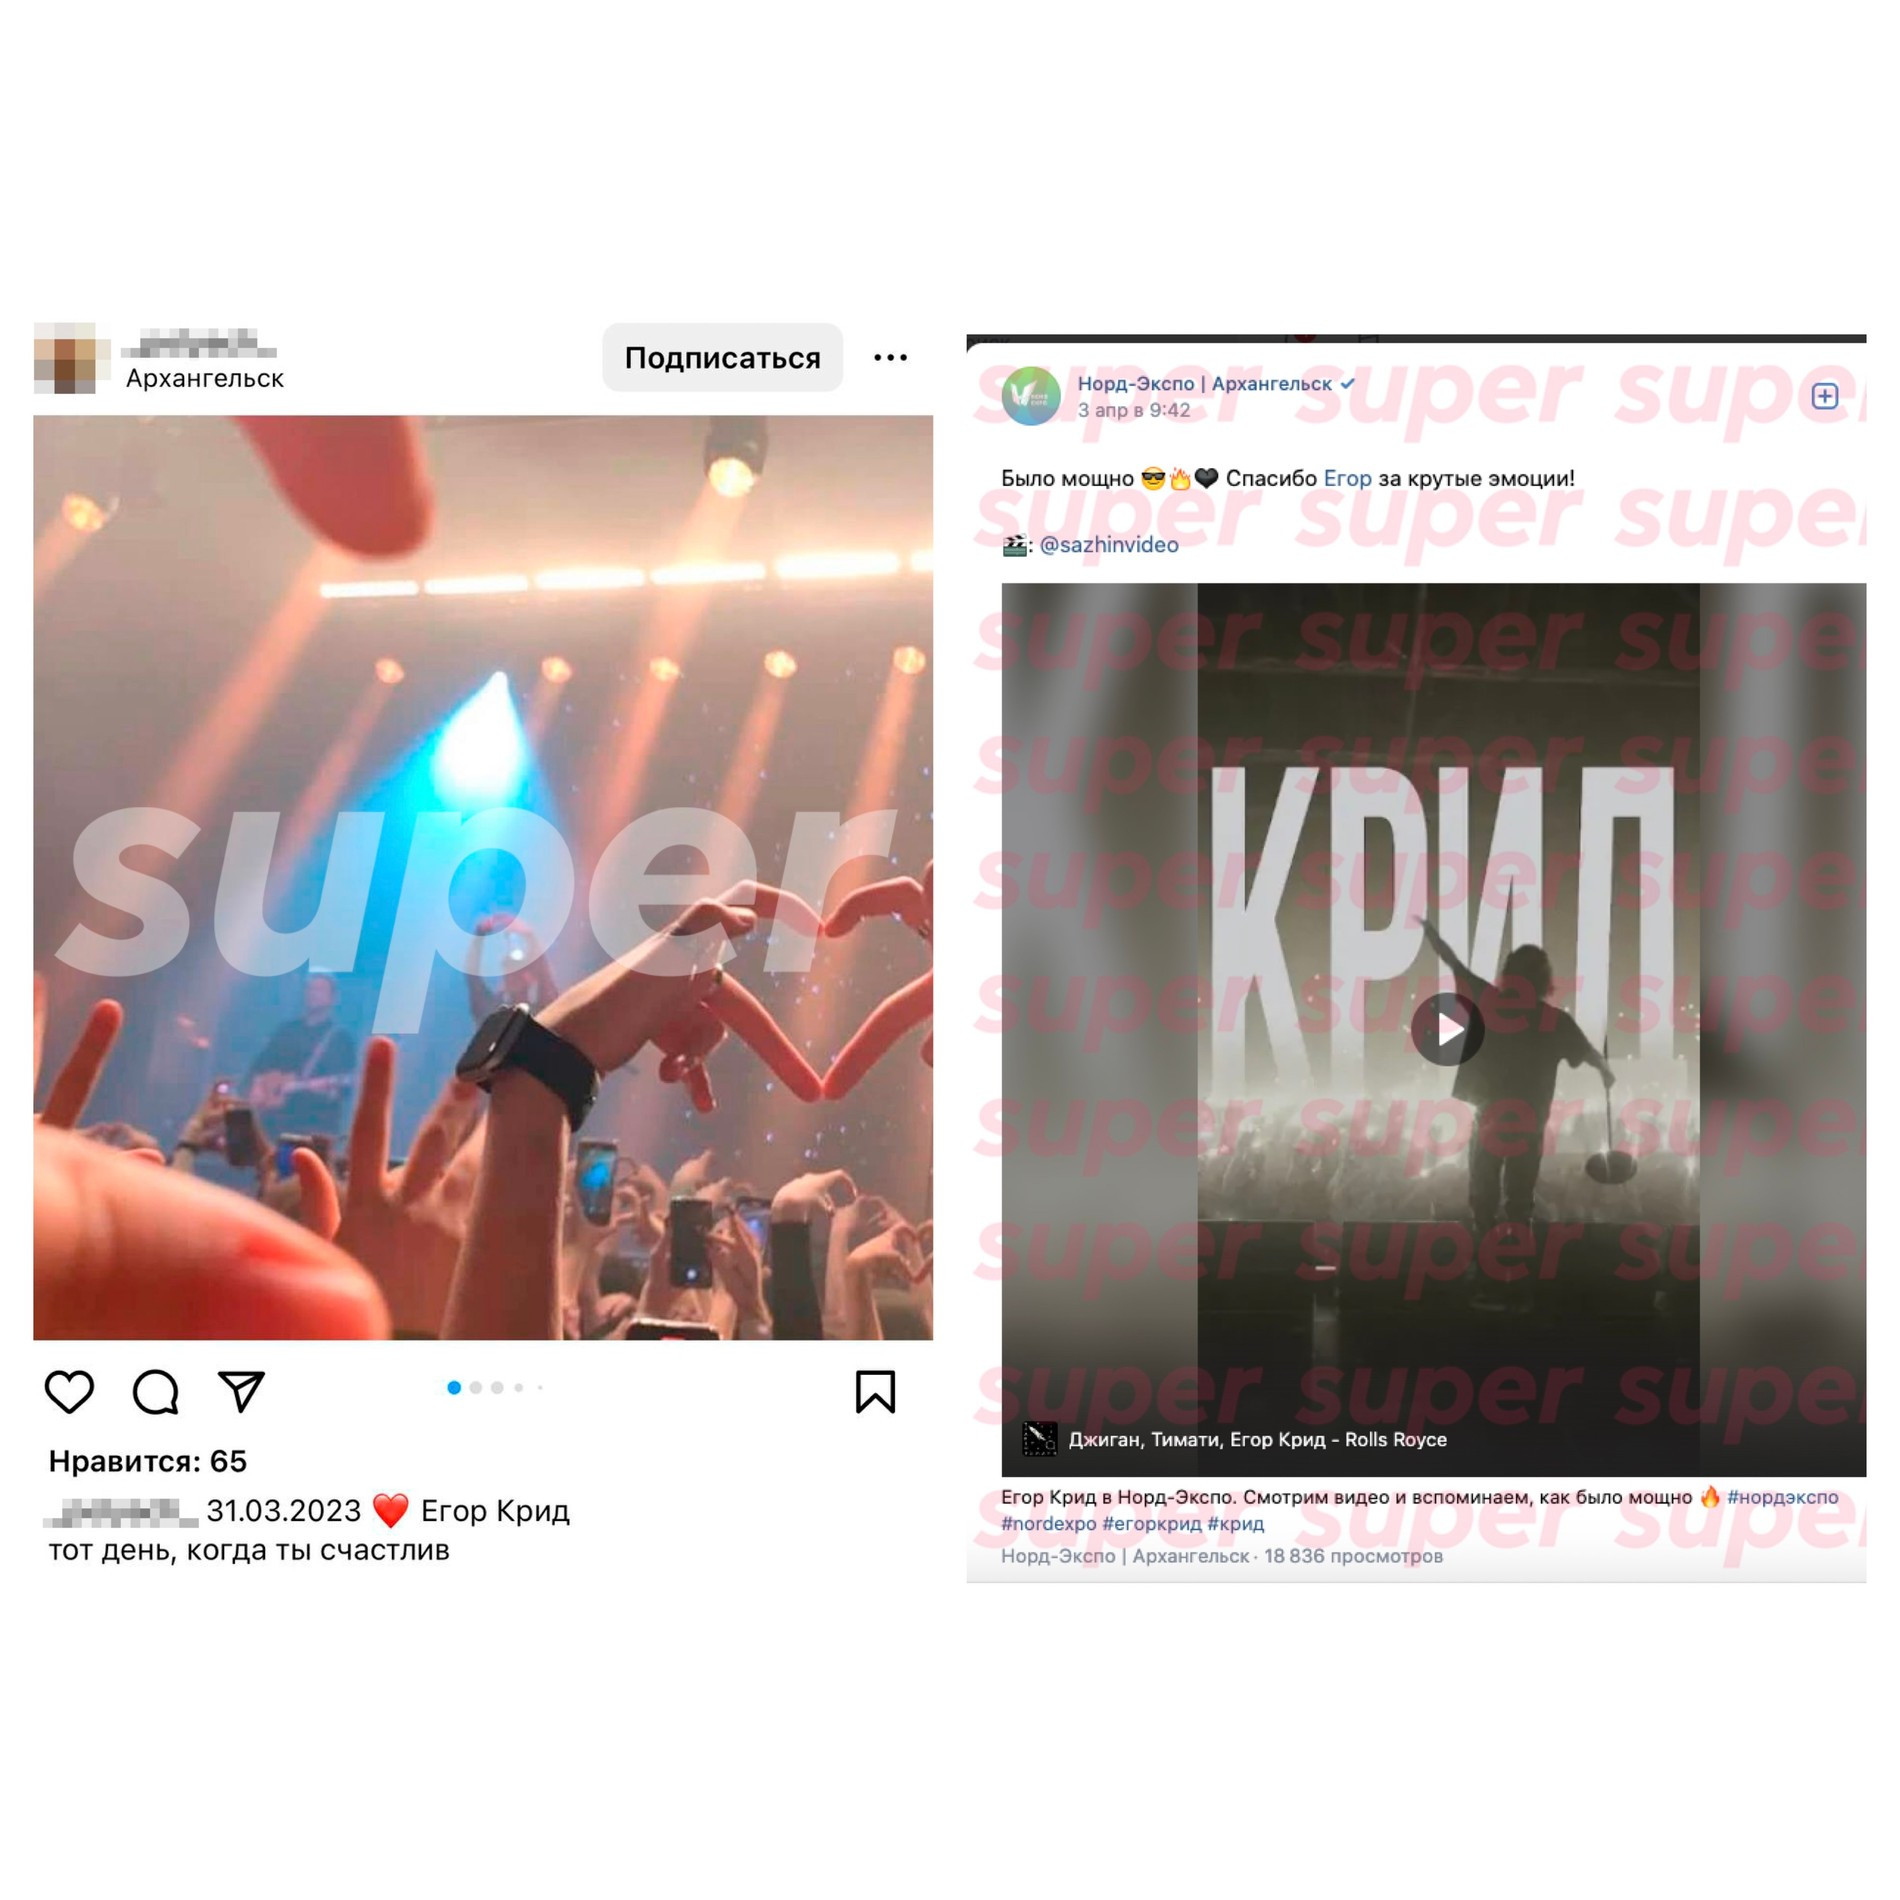 Слева — отзыв зрителя о концерте, справа — отзыв концертной площадки 